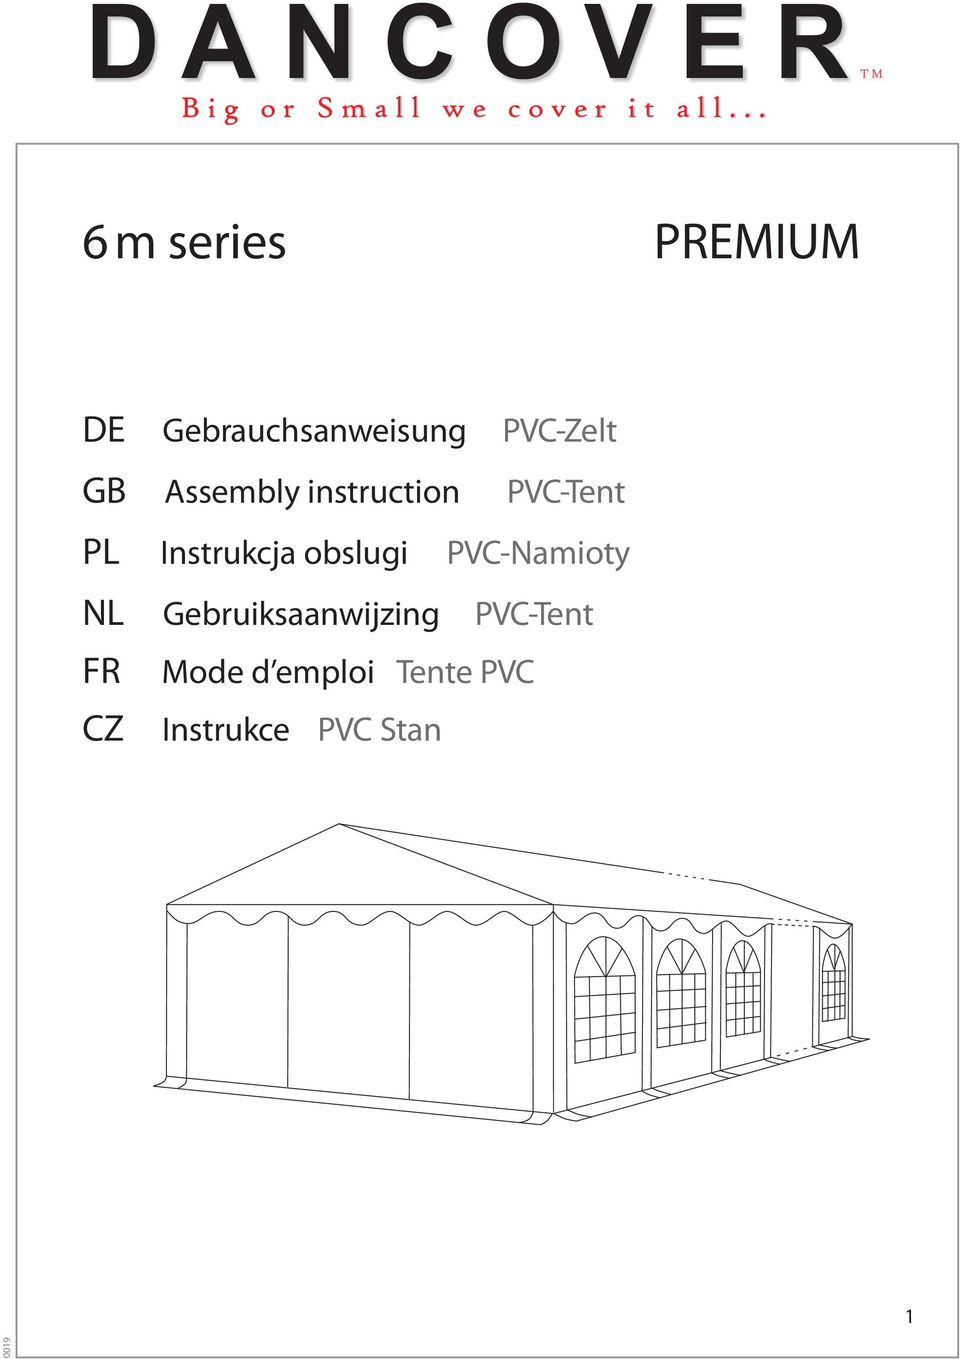 instruction PVC-Tent PL Instrukcja obslugi PVC-Namioty NL